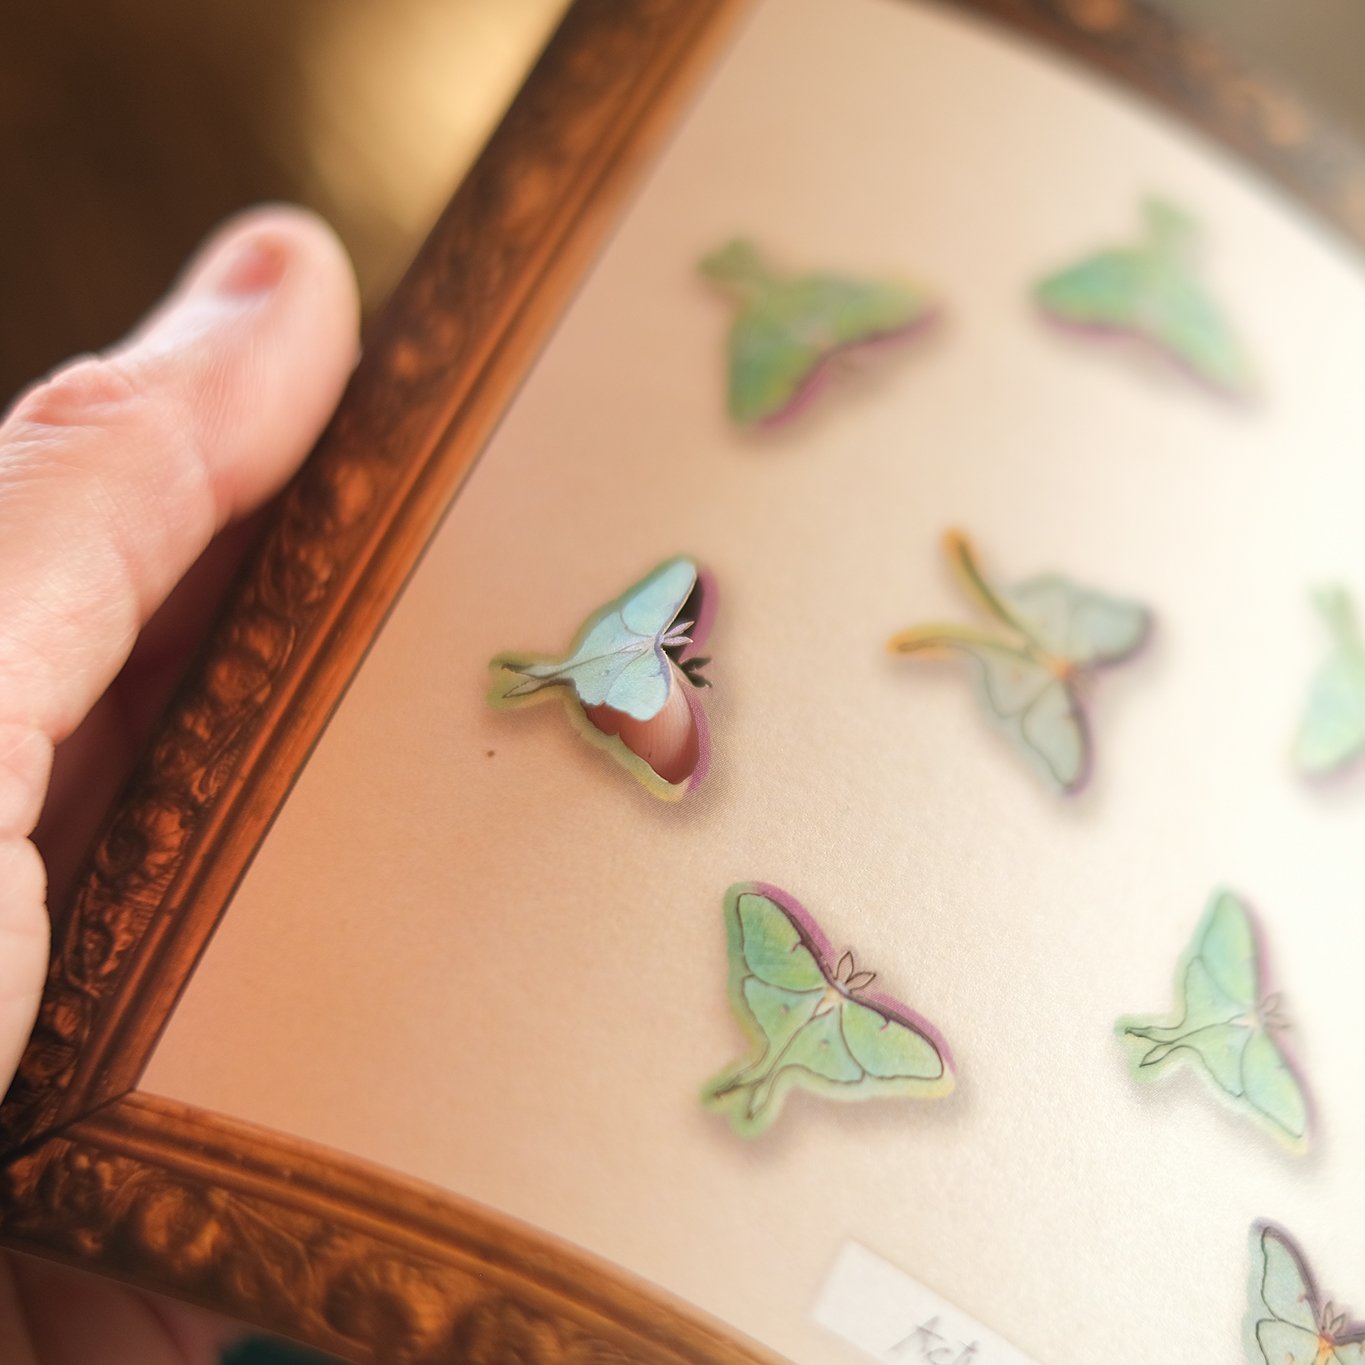 'Snowmoon' Micro Luna Moth Collection - Artist Discount